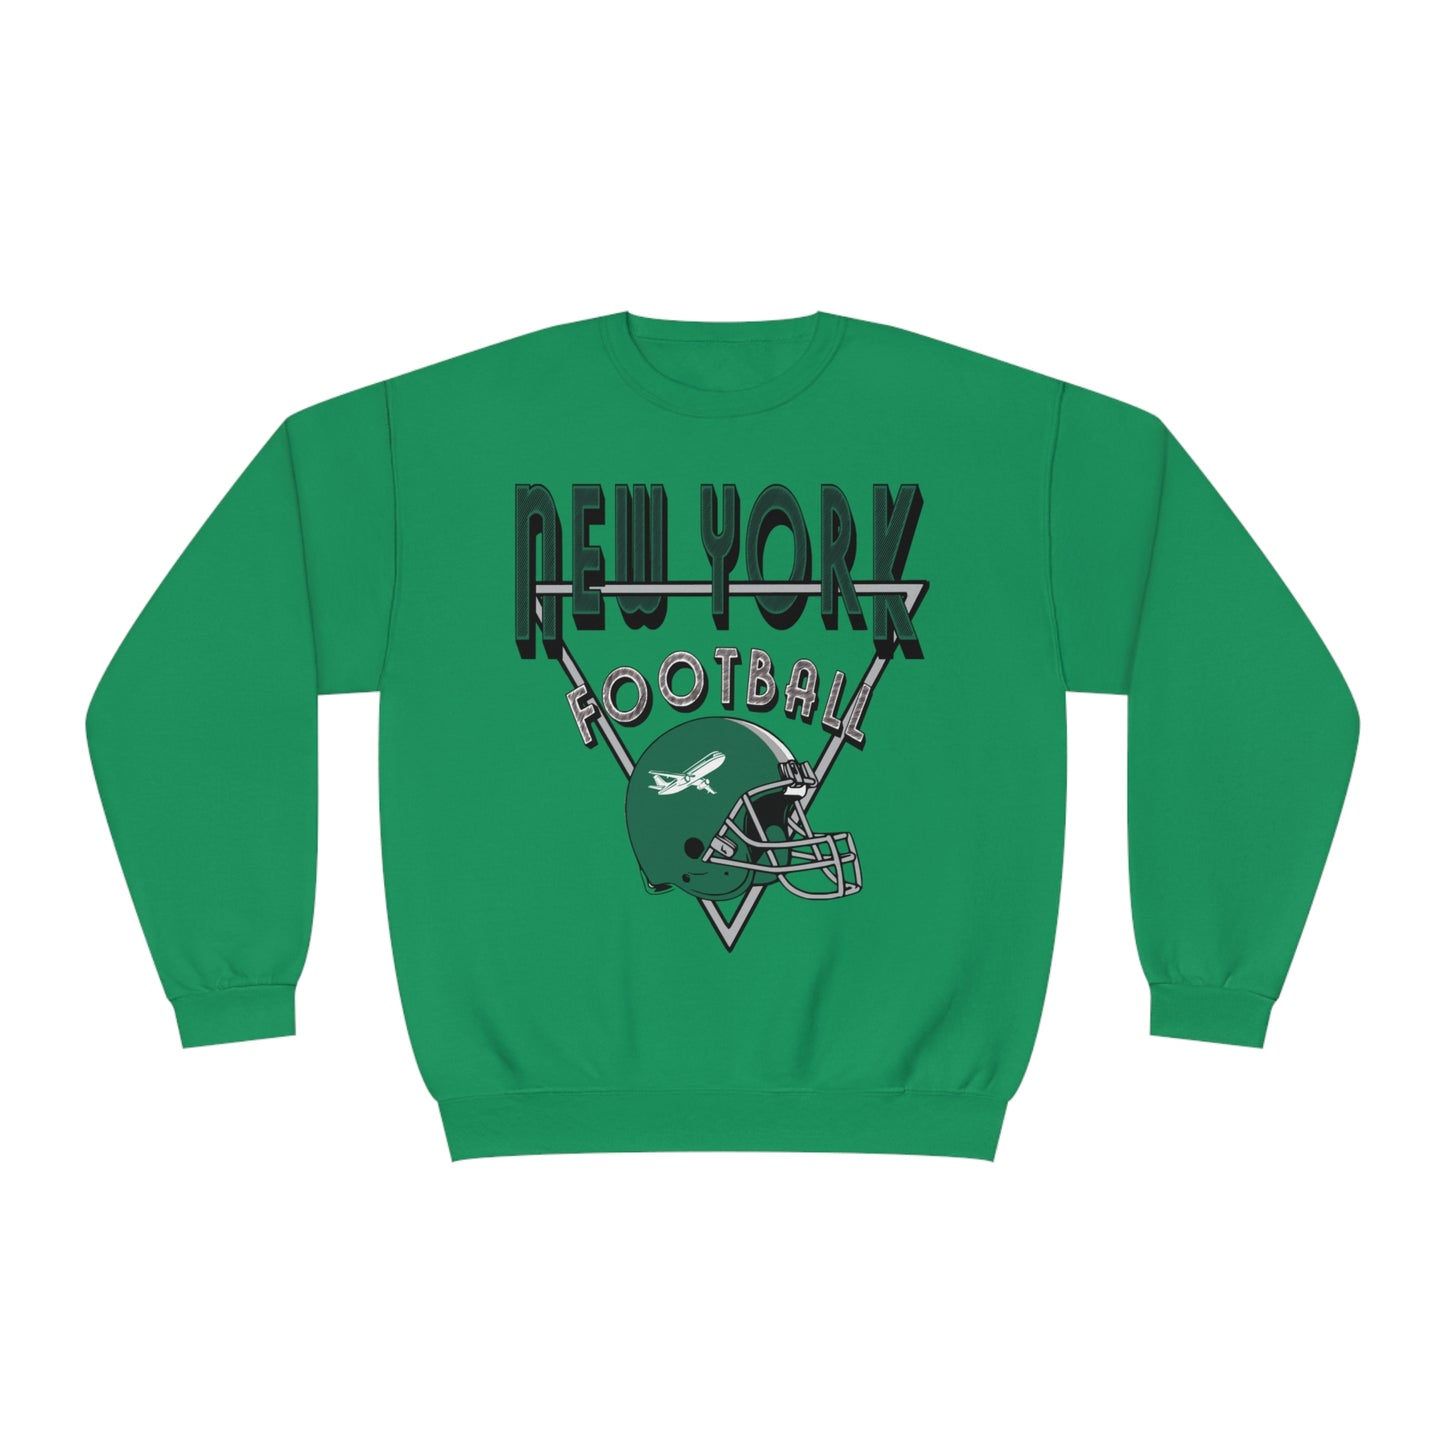 Throwback New York Jets Football Sweatshirt - Vintage Style Football Crewneck - Men's & Women's Football Apparel